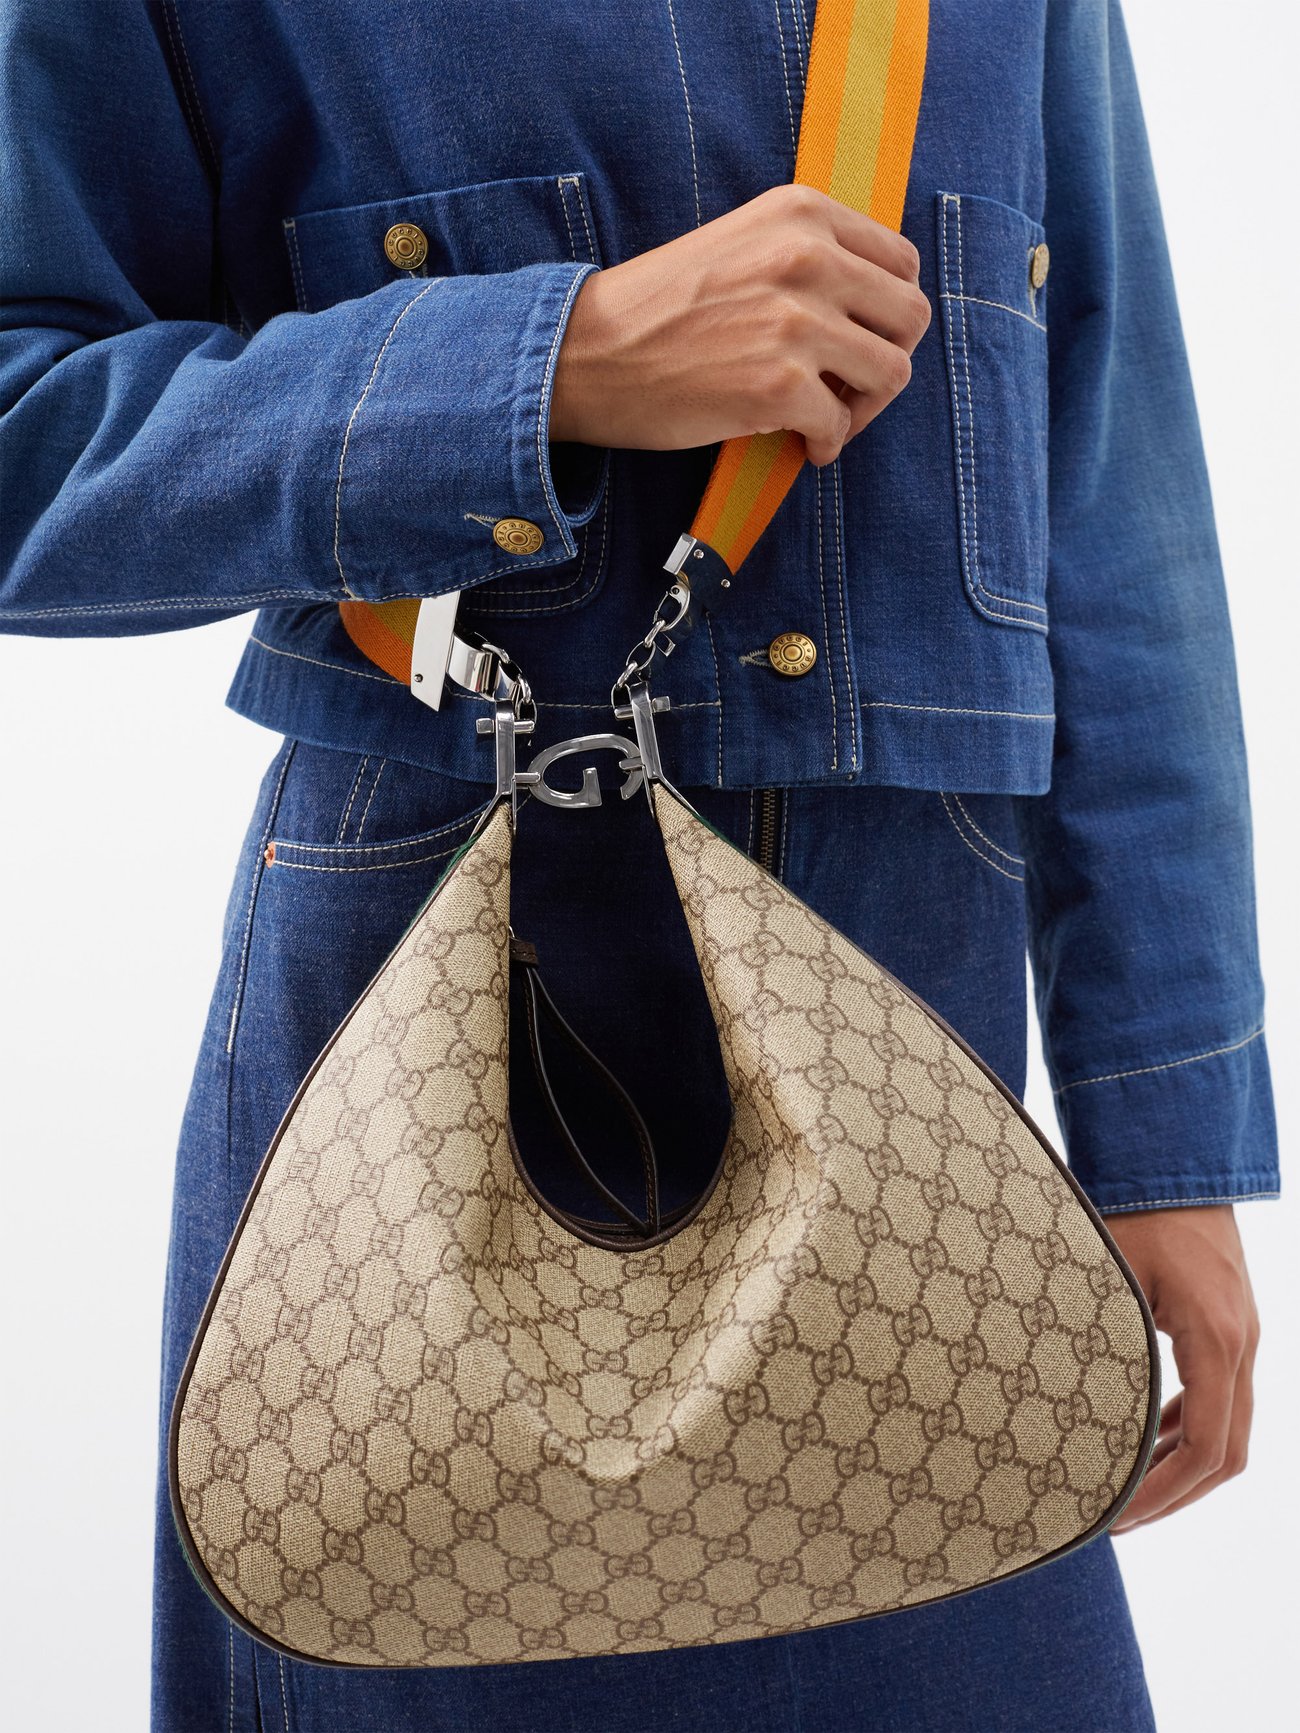 Gucci Attache large shoulder bag in beige and blue Supreme